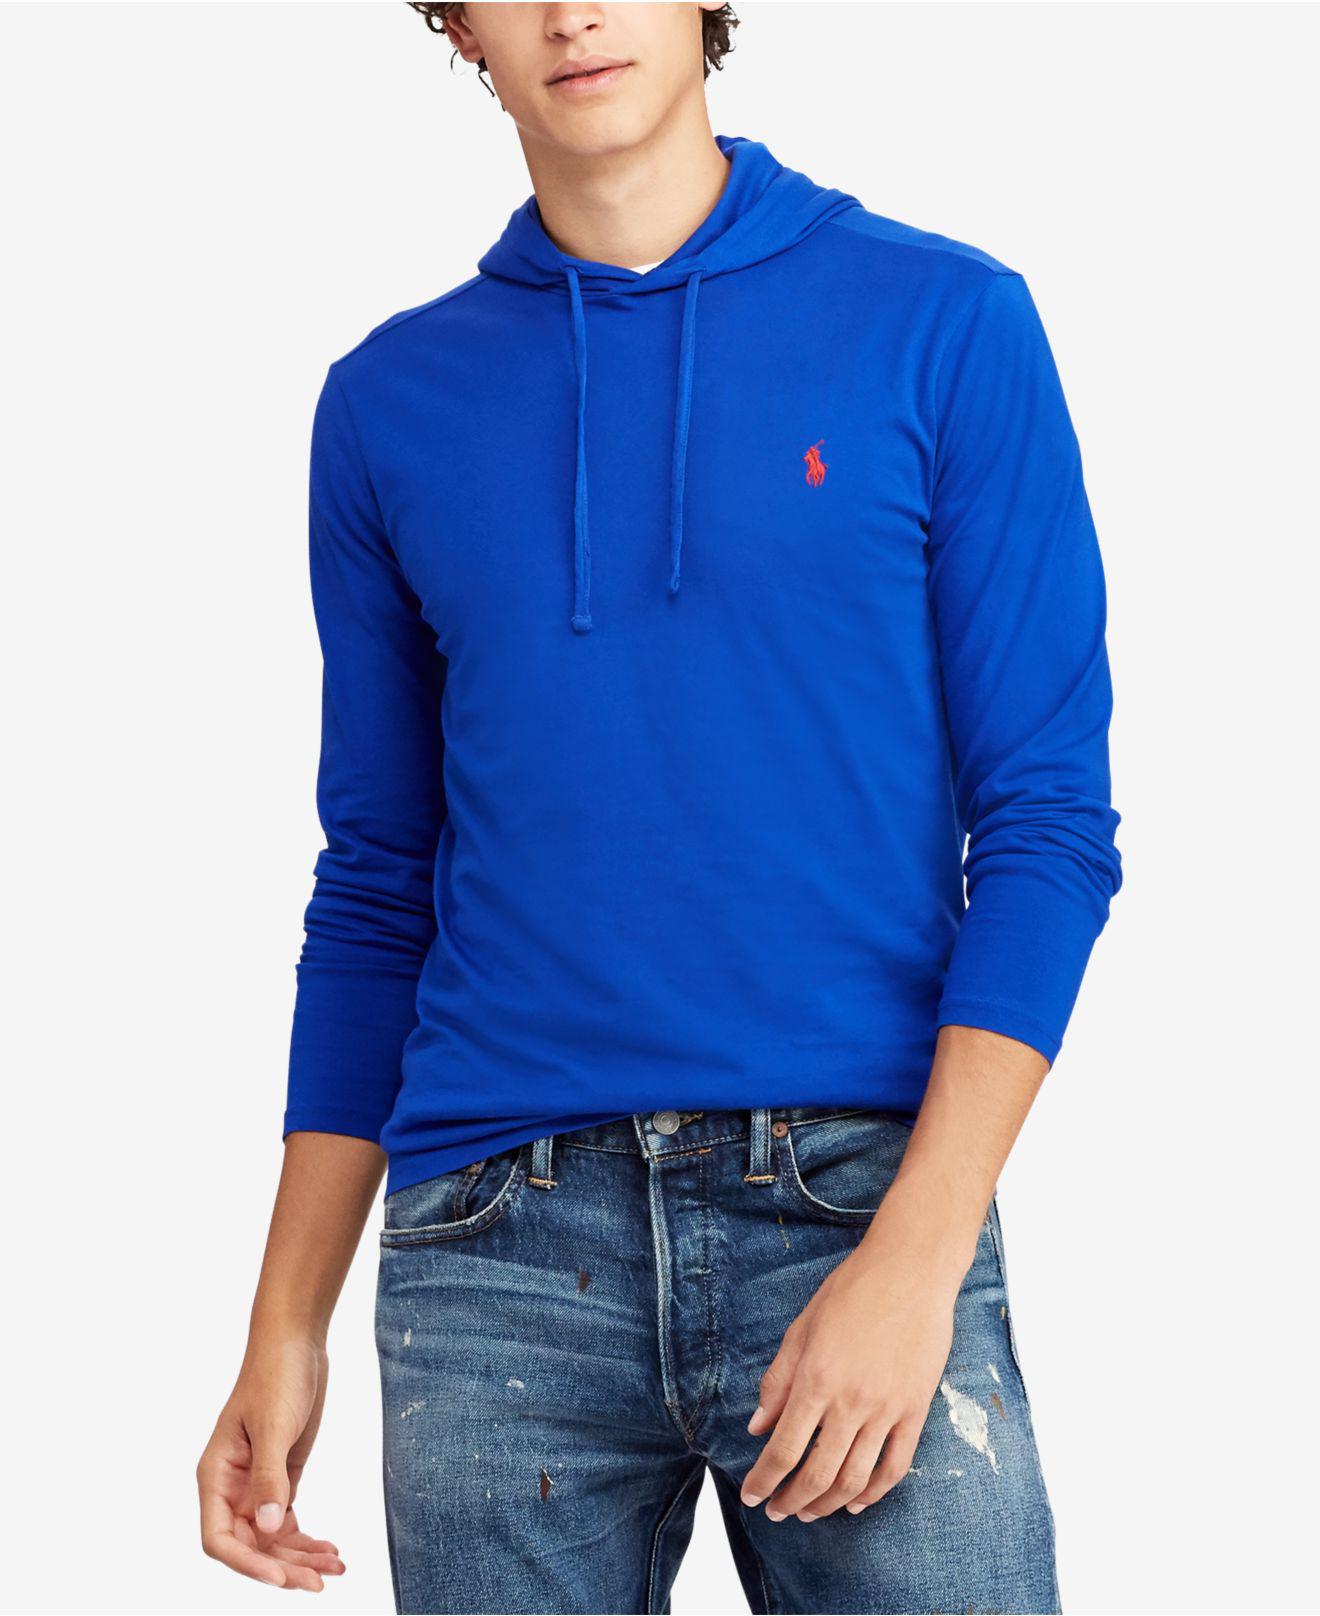 Lyst - Polo Ralph Lauren Hooded Long-sleeve T-shirt in Blue for Men ...